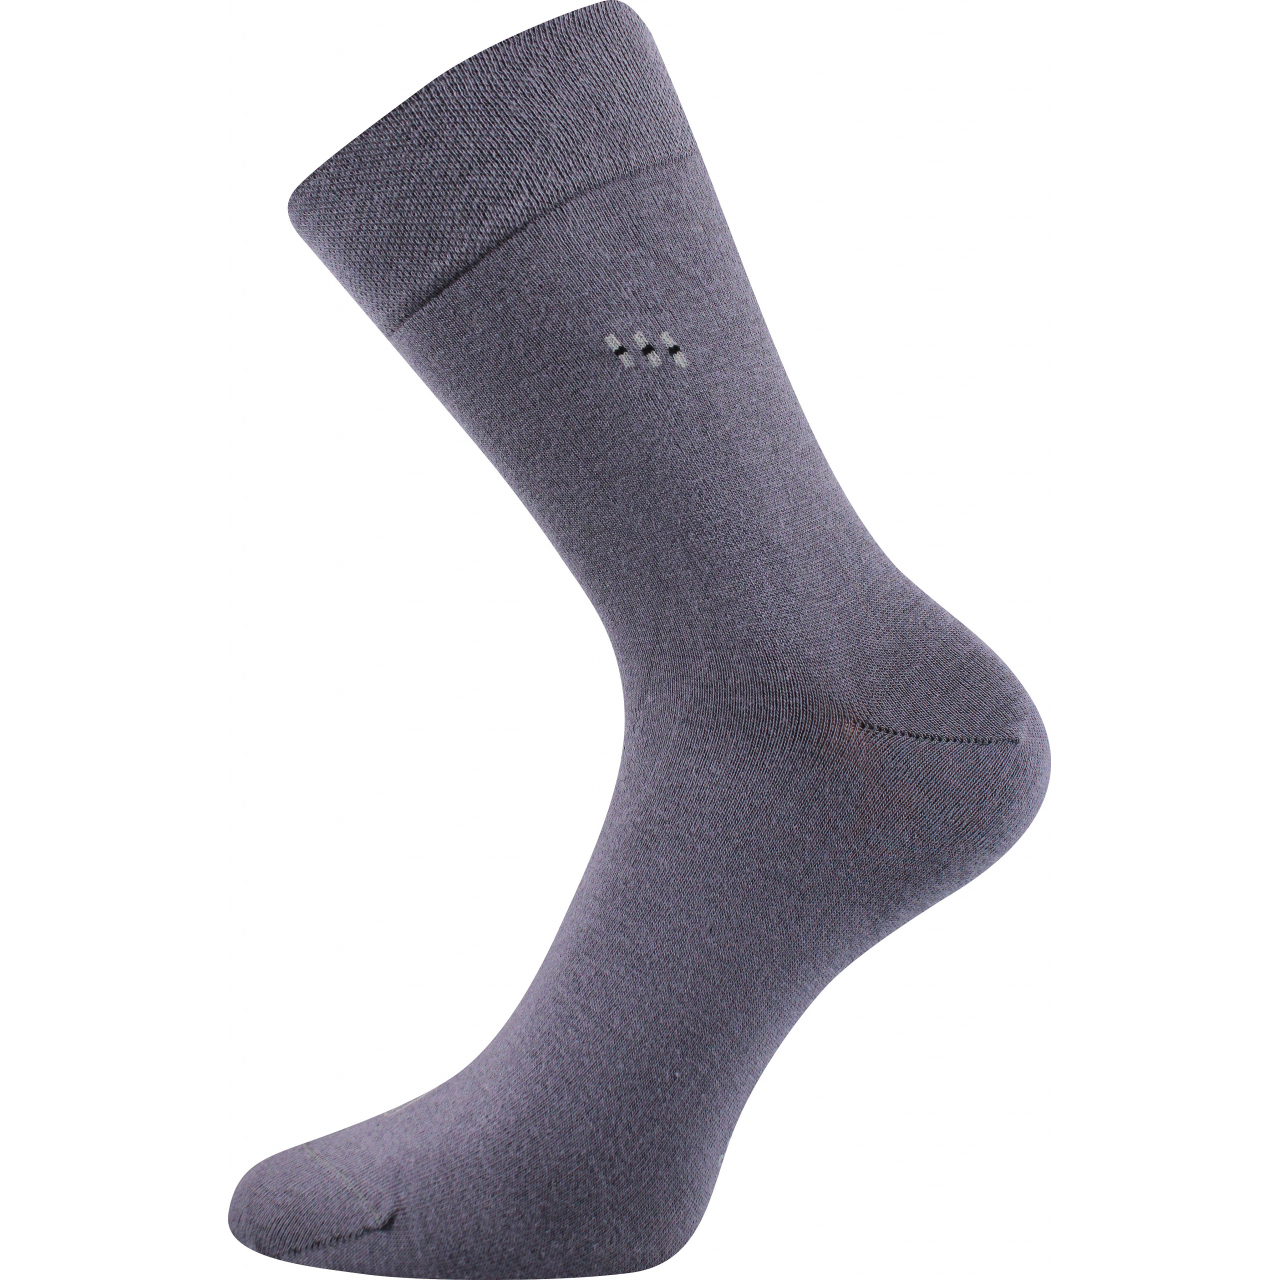 Ponožky pánské společenské Lonka Dipool - šedé, 47-50